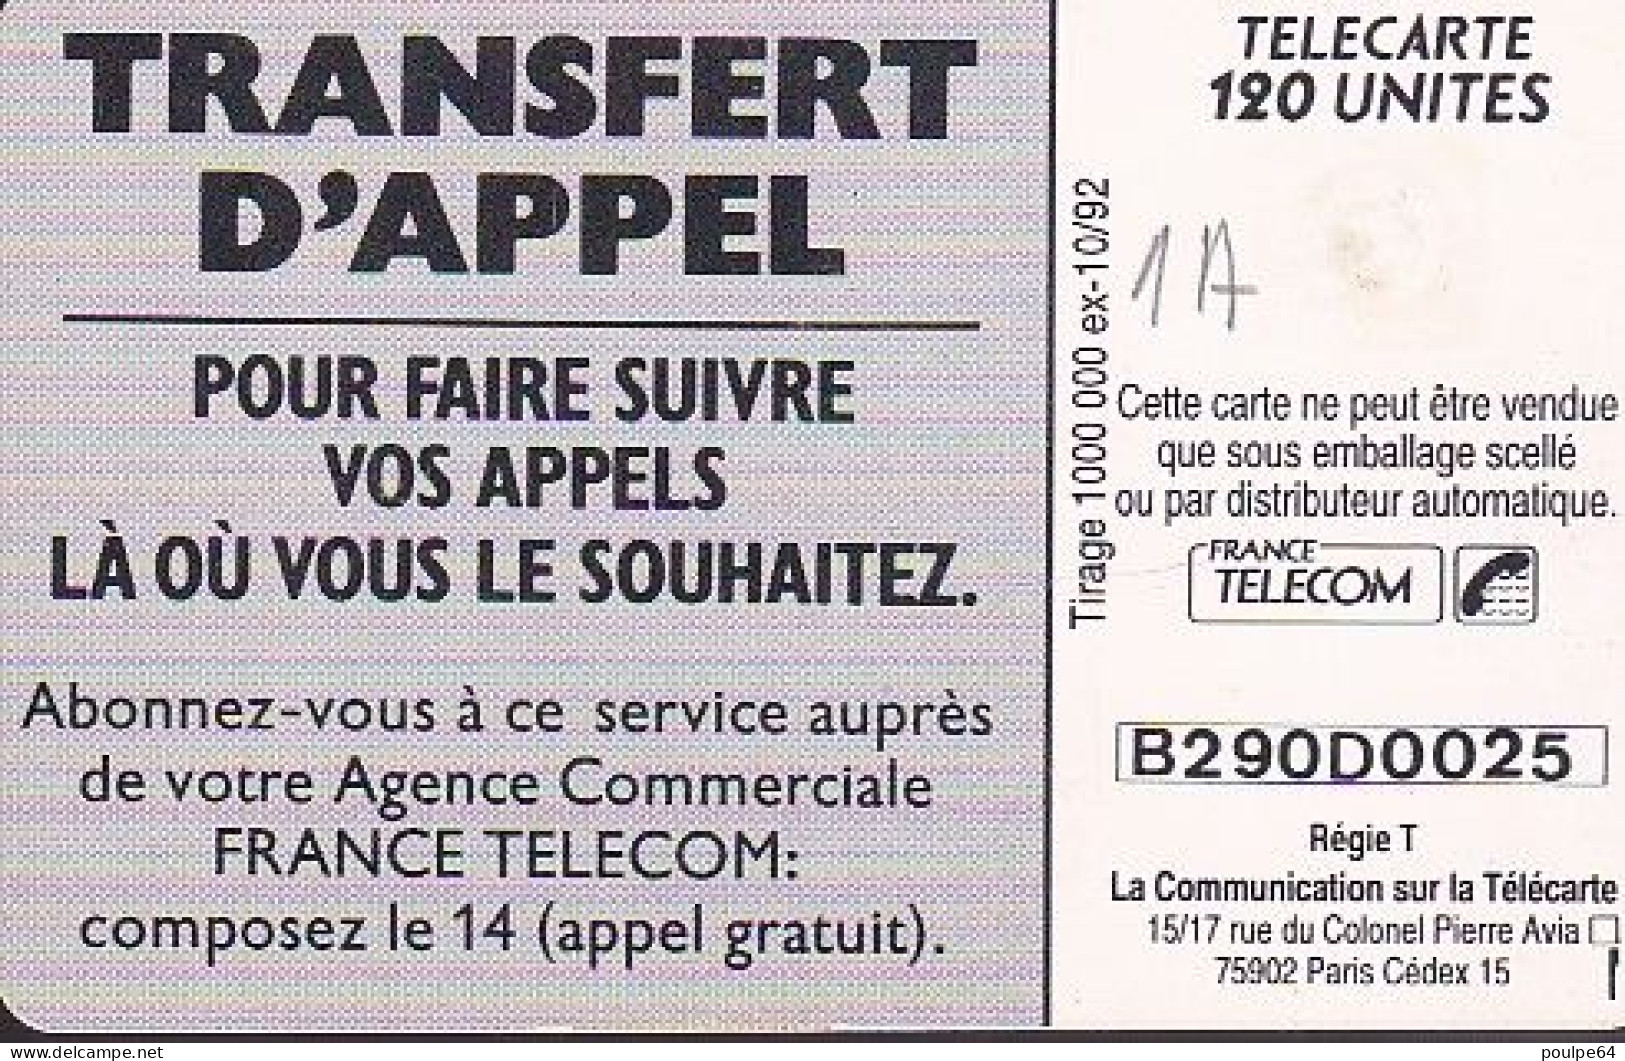 F276a - 10/1992 - TRANSFERT D'APPEL " Plage " - 120 GEM - 1992